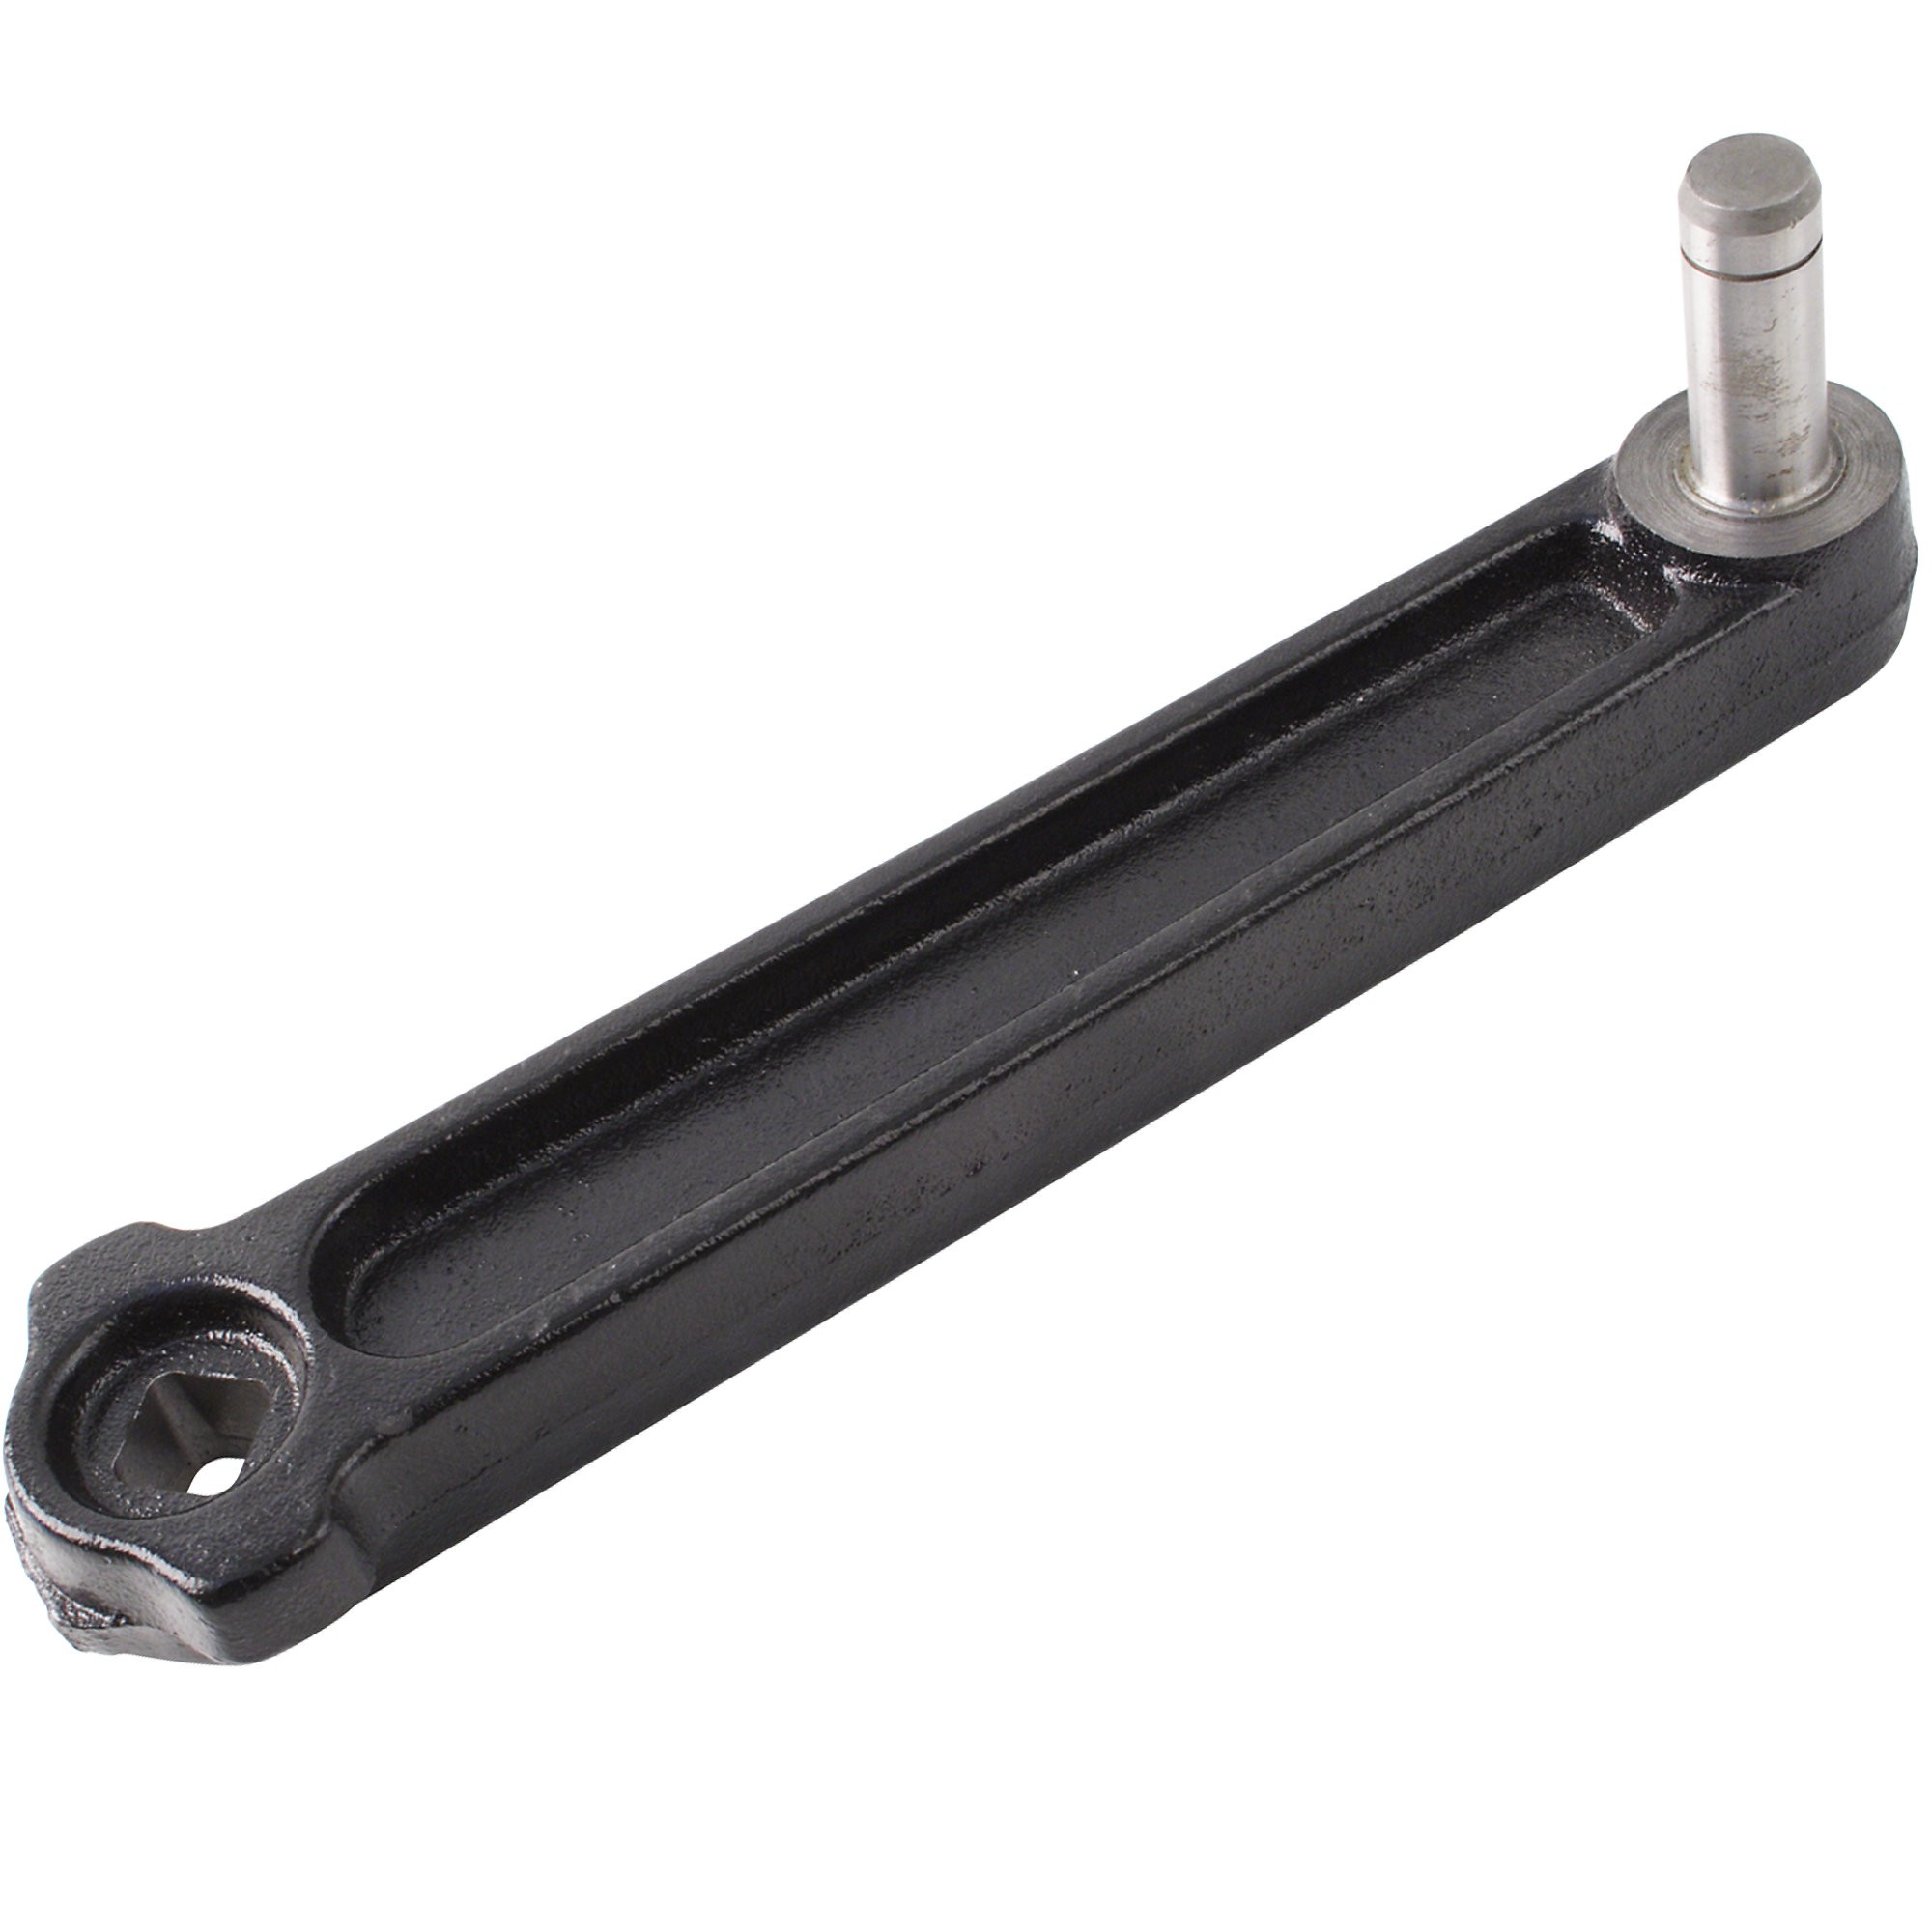 Steel Crank Arm, Black, Fits certain Precor EFX 546 Ellipticals